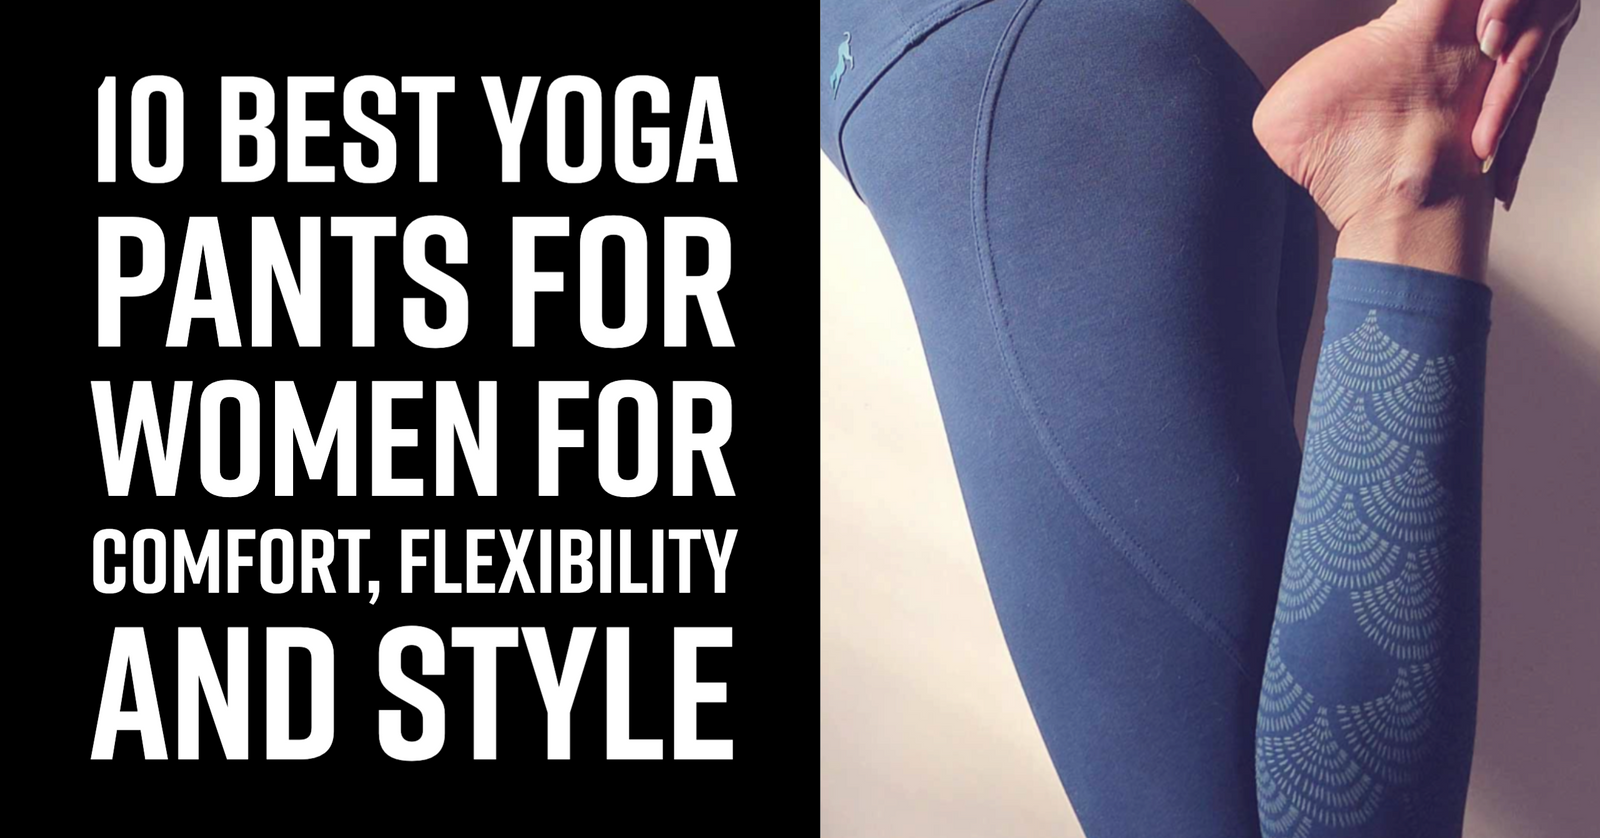 Buy Womens Yoga Pants with Pockets Straight-Leg Loose Comfy Modal